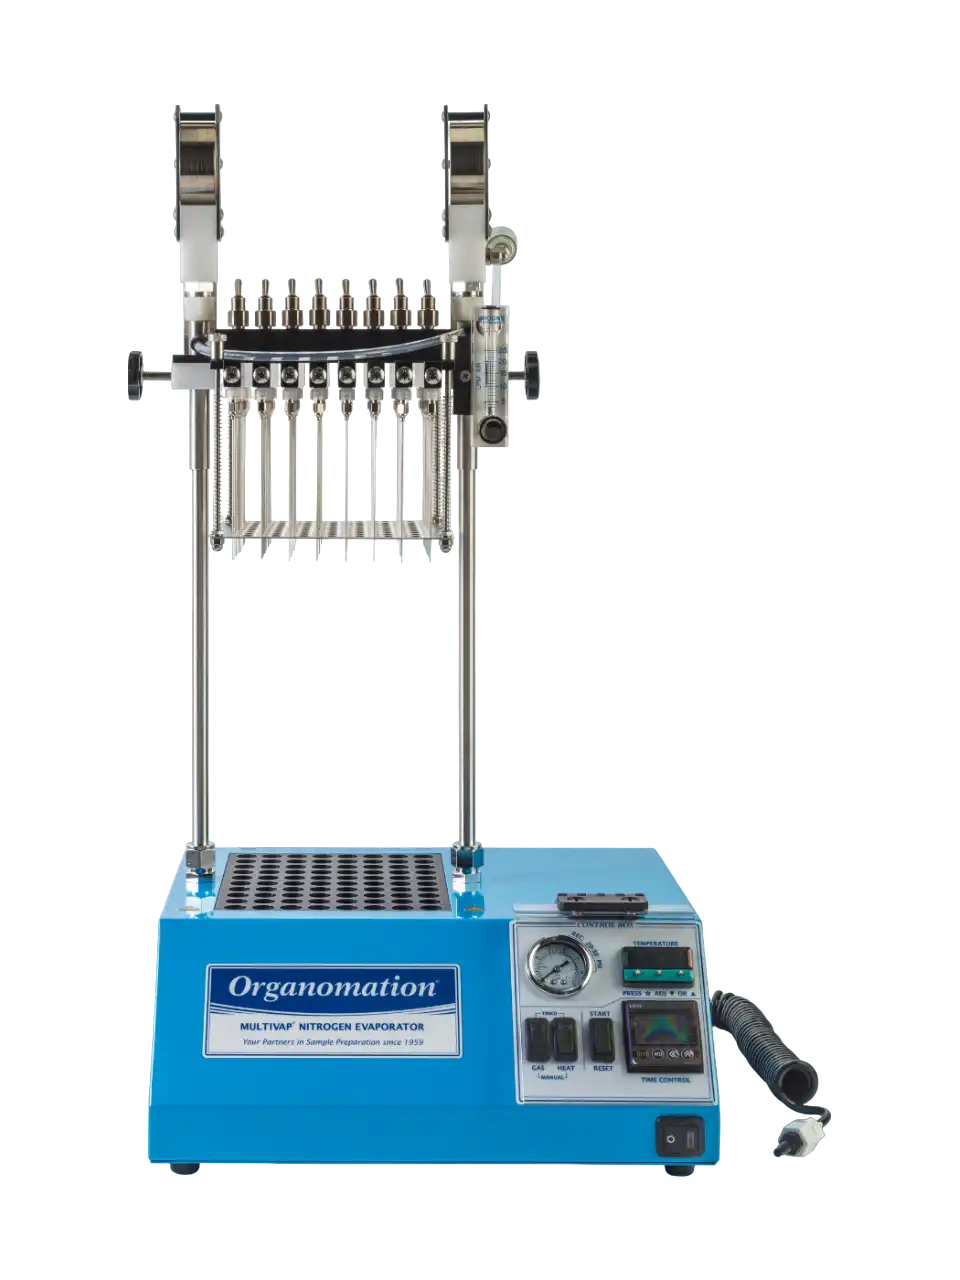 Nitrogen Evaporator, MULTIVAP Series, Acid Resistant Coating, with Dry Block Heater (30-120°C and 900 W), Digital Control, 80 Sample Positions